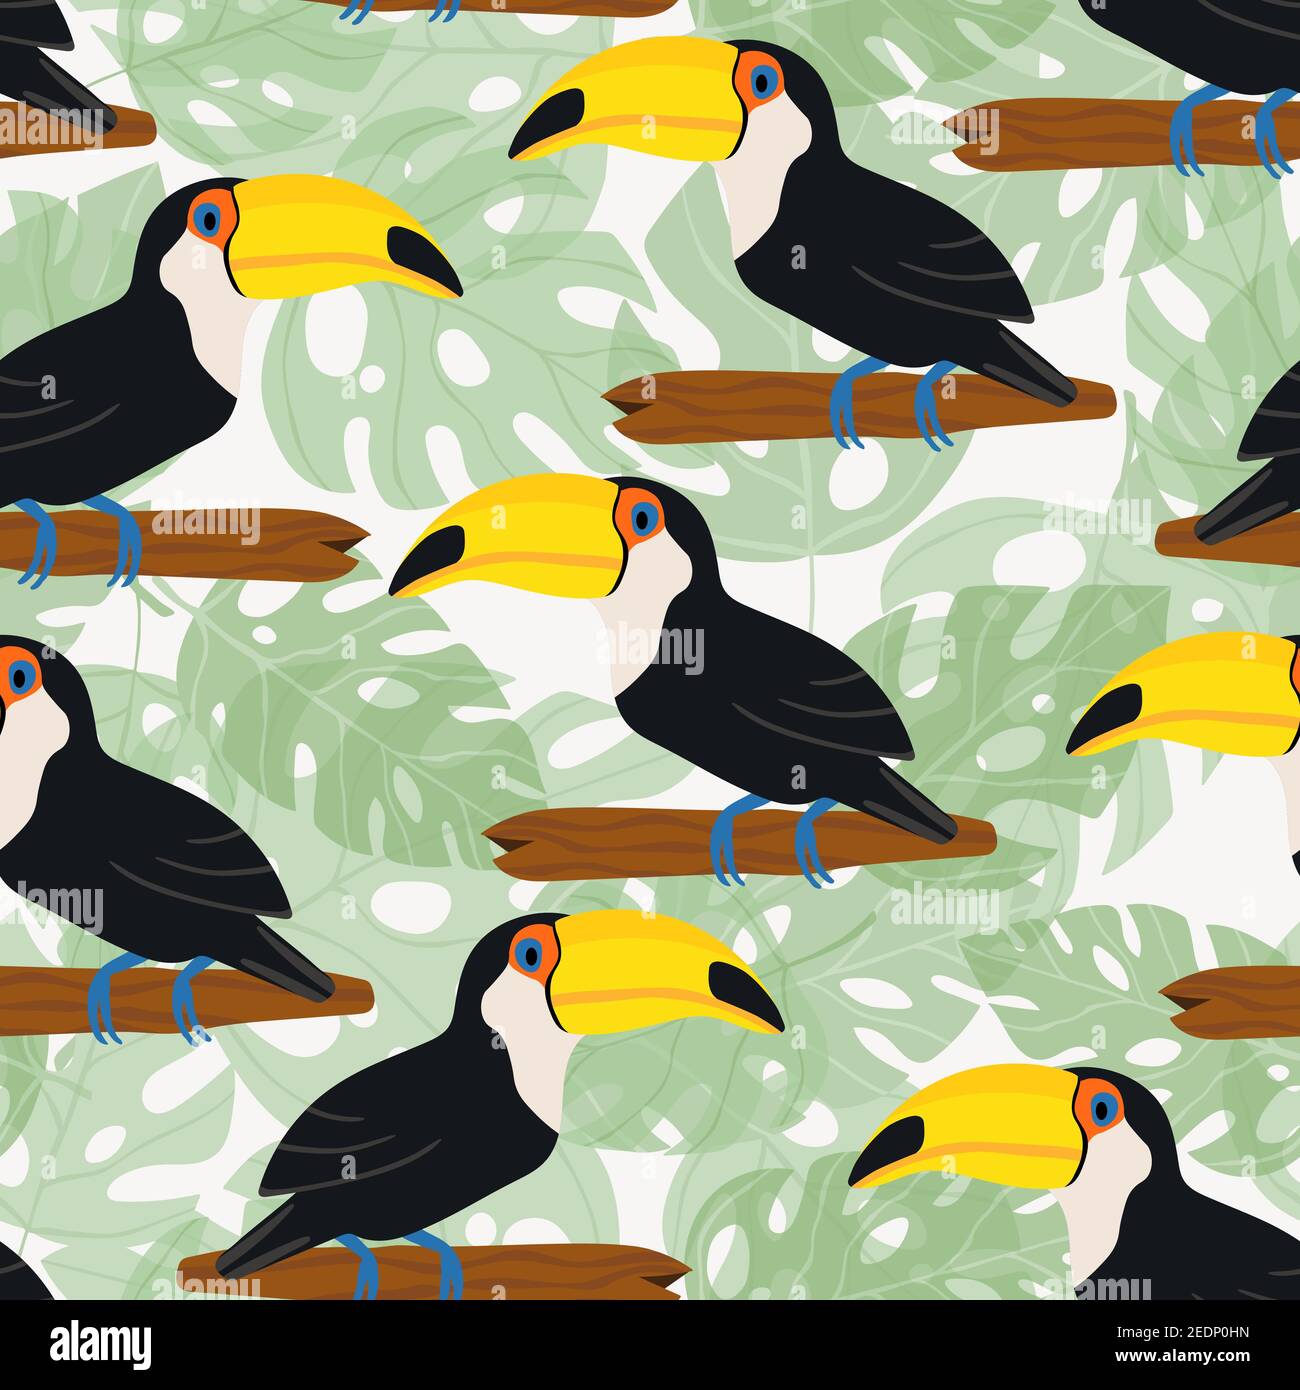 Download wallpaper 1350x2400 toucan bird beak sky iphone 876s6  for parallax hd background